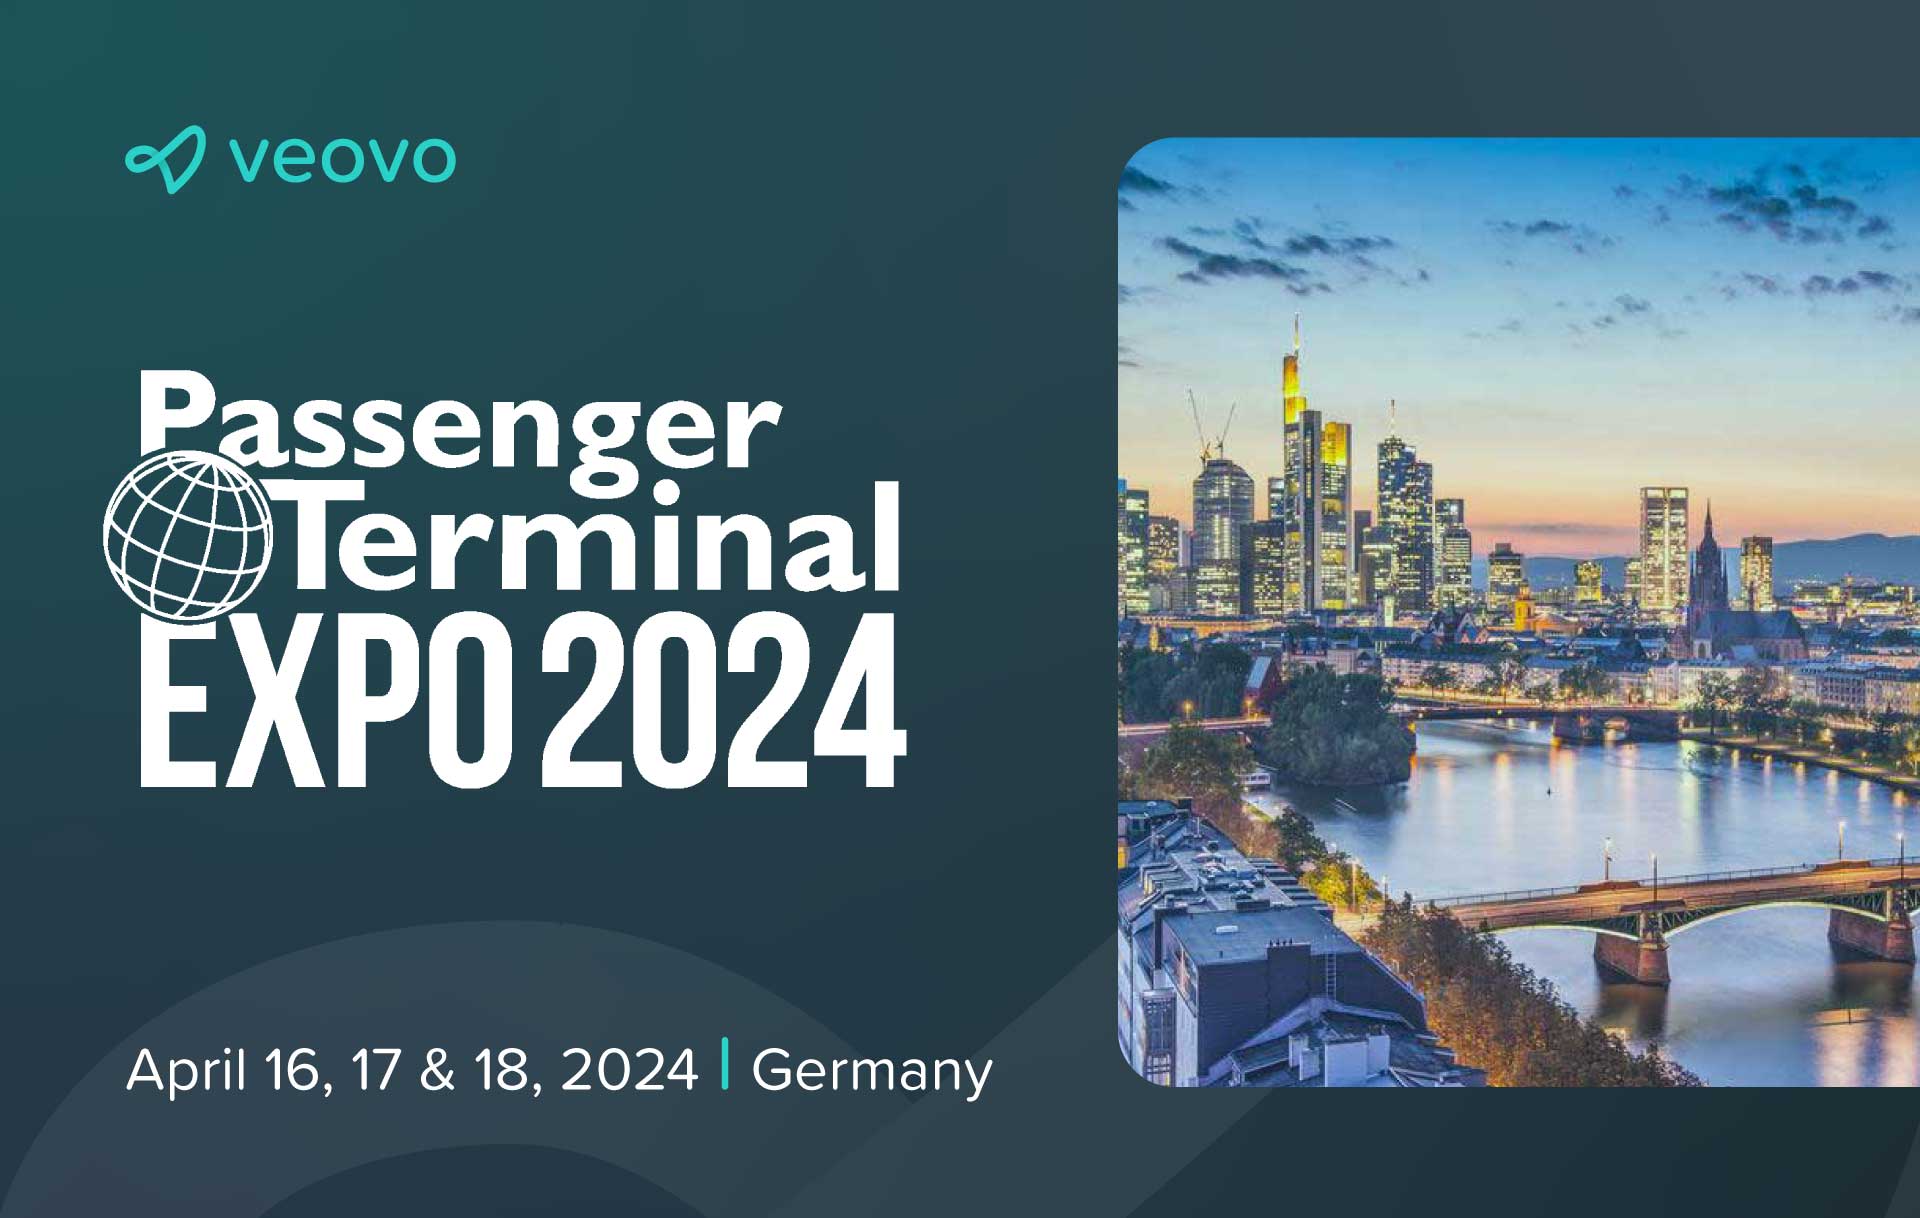 Passenger terminal expo 2024 Veovo